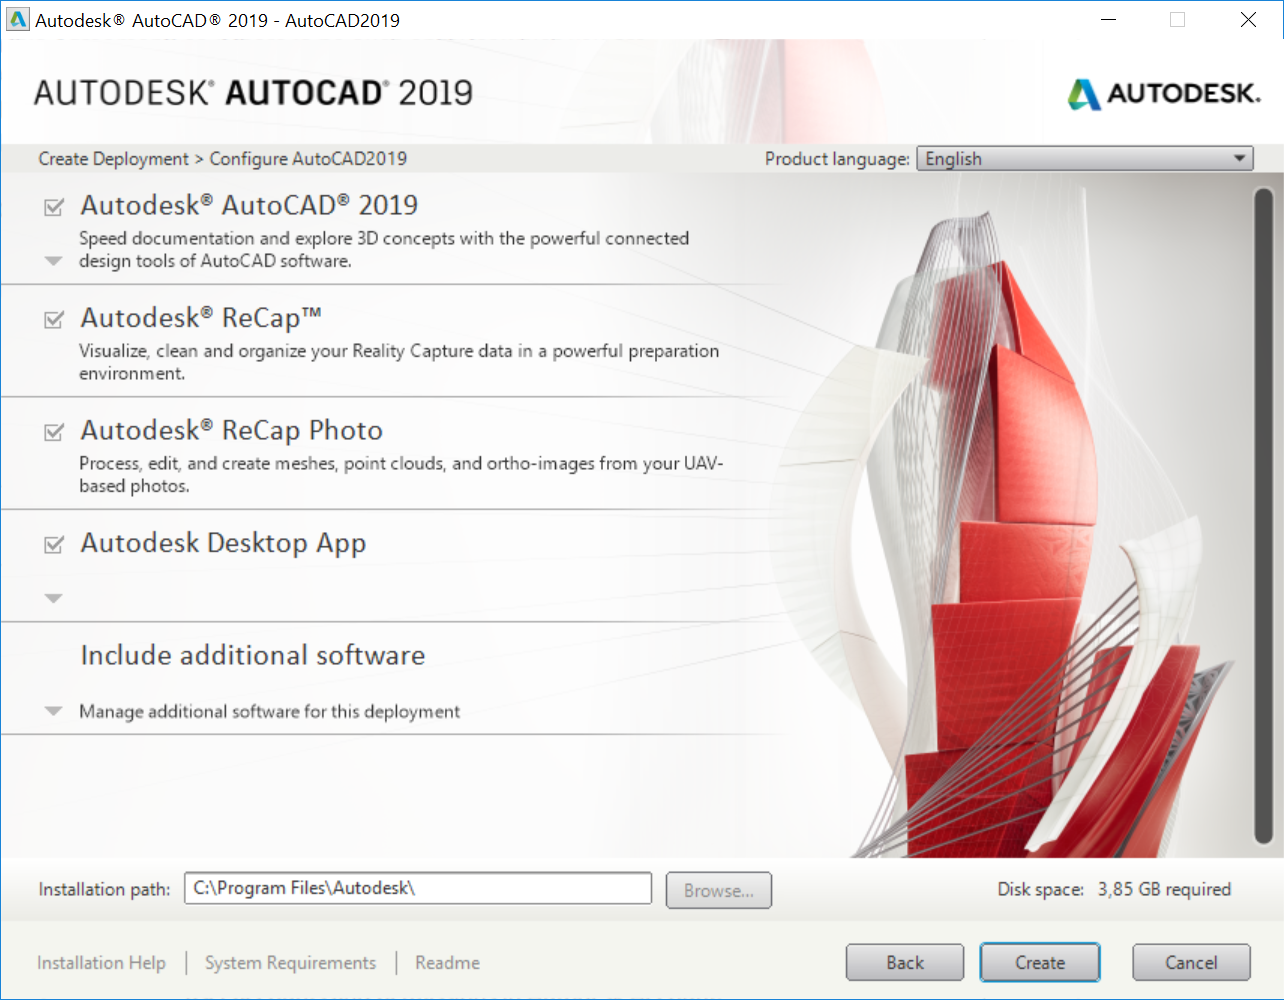 Autodesk Autocad 2019 Applications